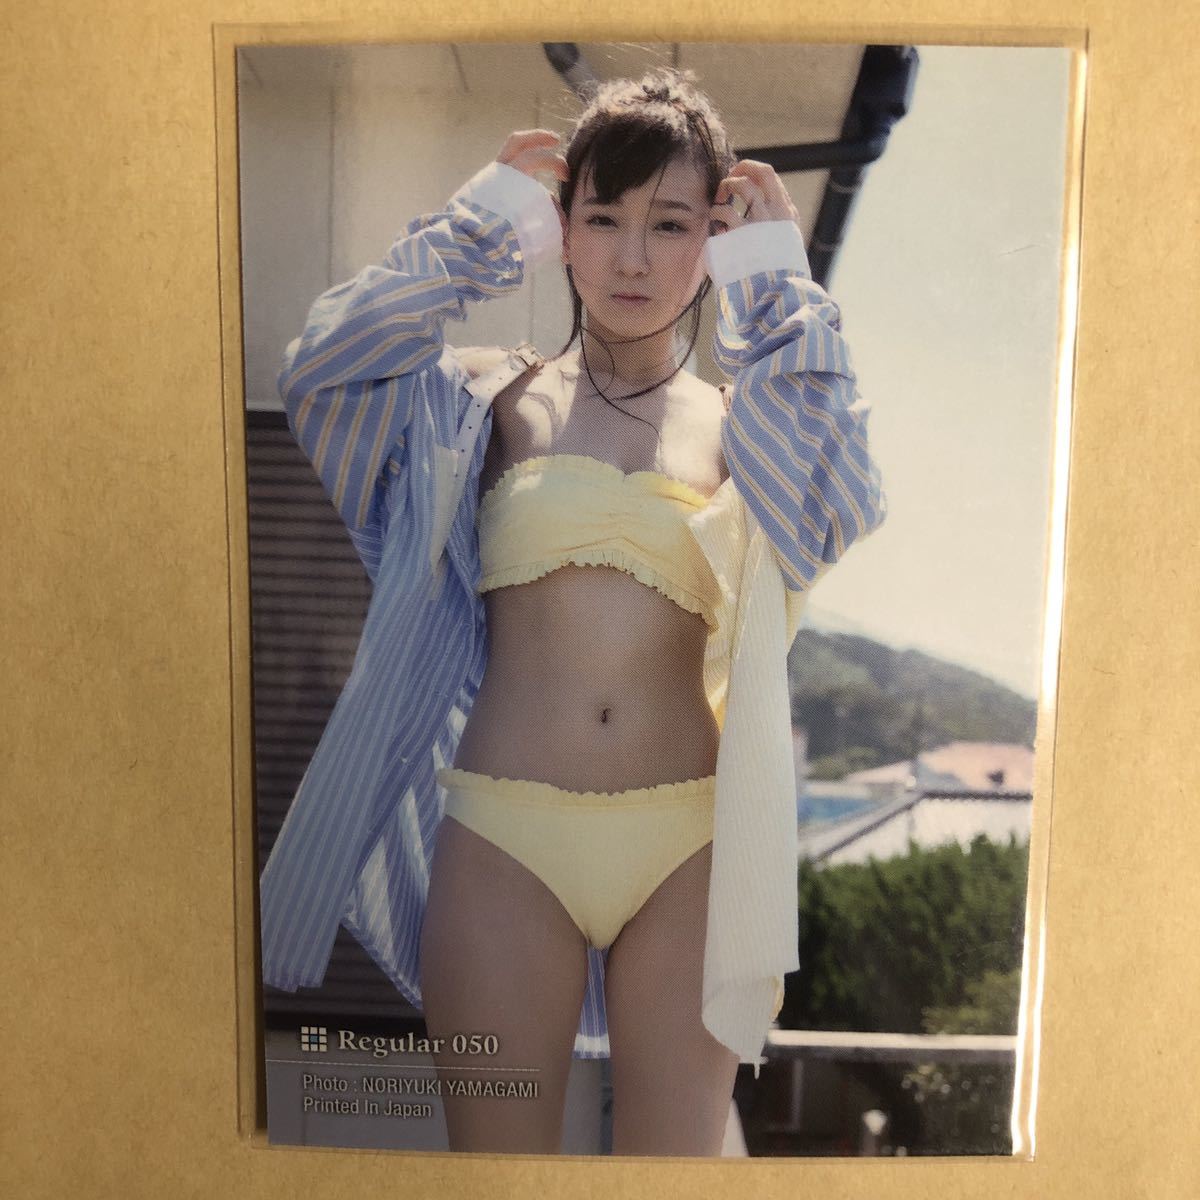 LADYBABY 金子理江 Vol.3 トレカ アイドル グラビア カード 水着 ビキニ 050 タレント トレーディングカード_画像1